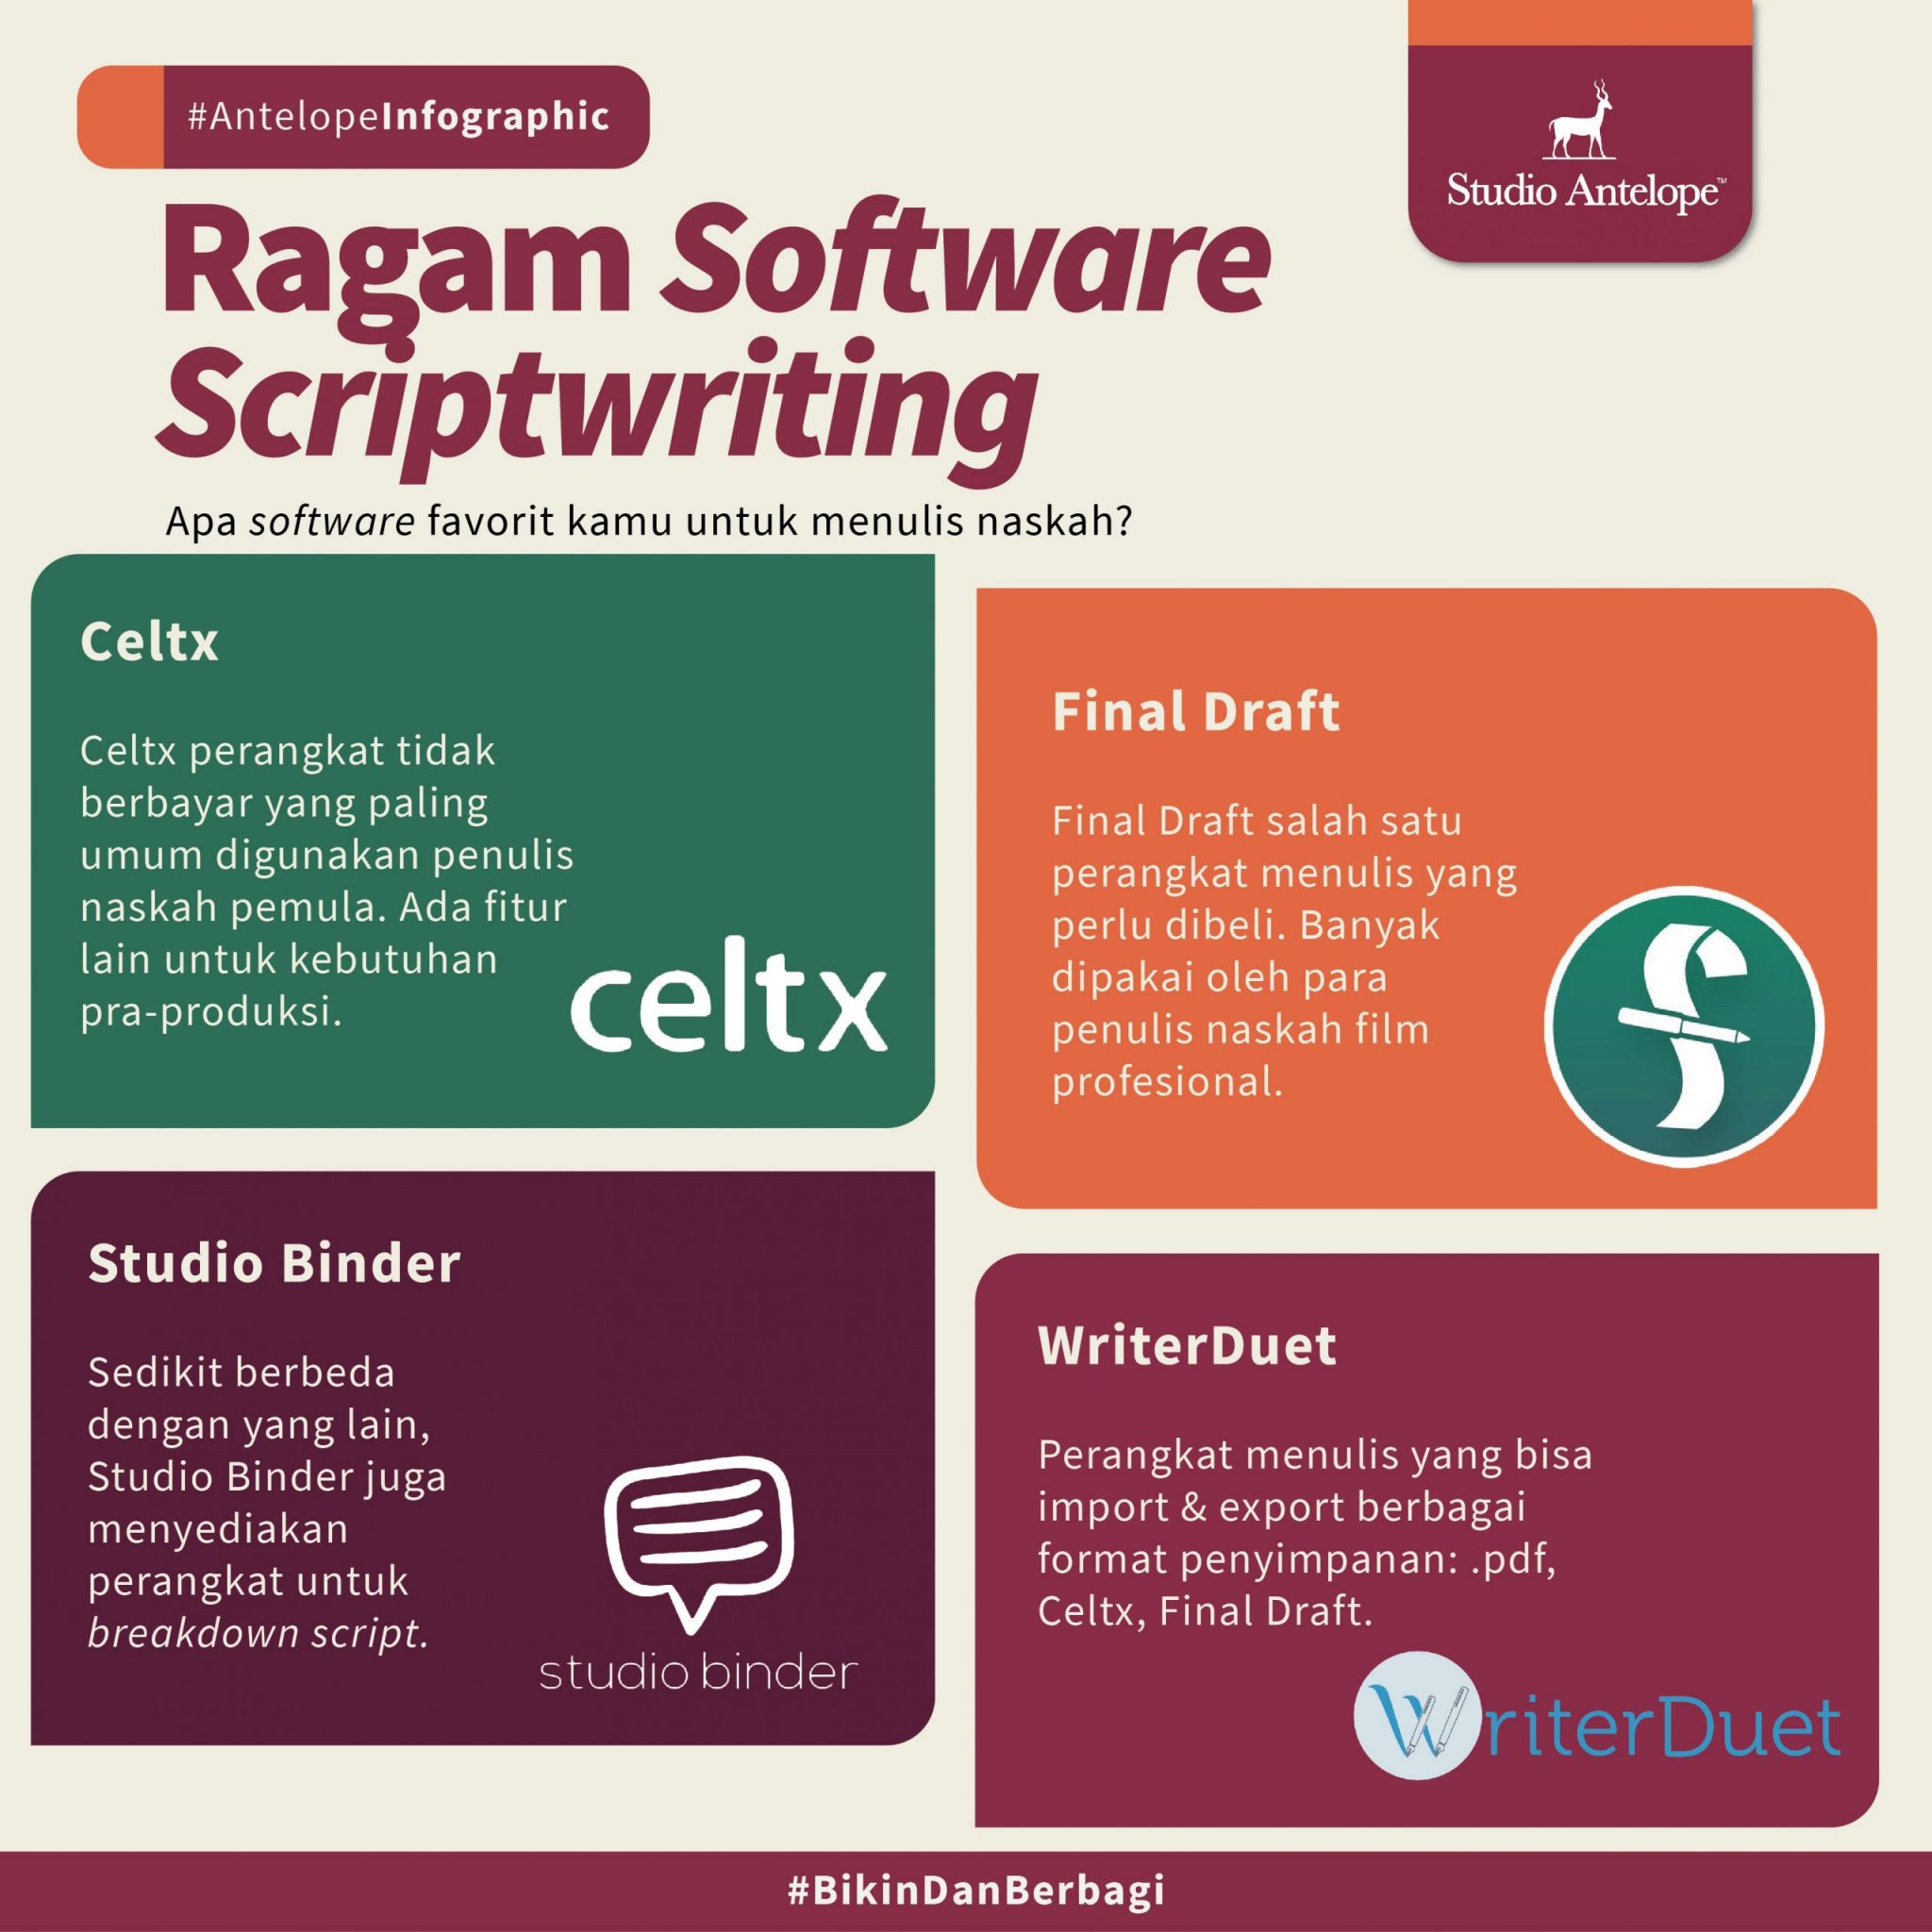 Ragam Software Scriptwriting